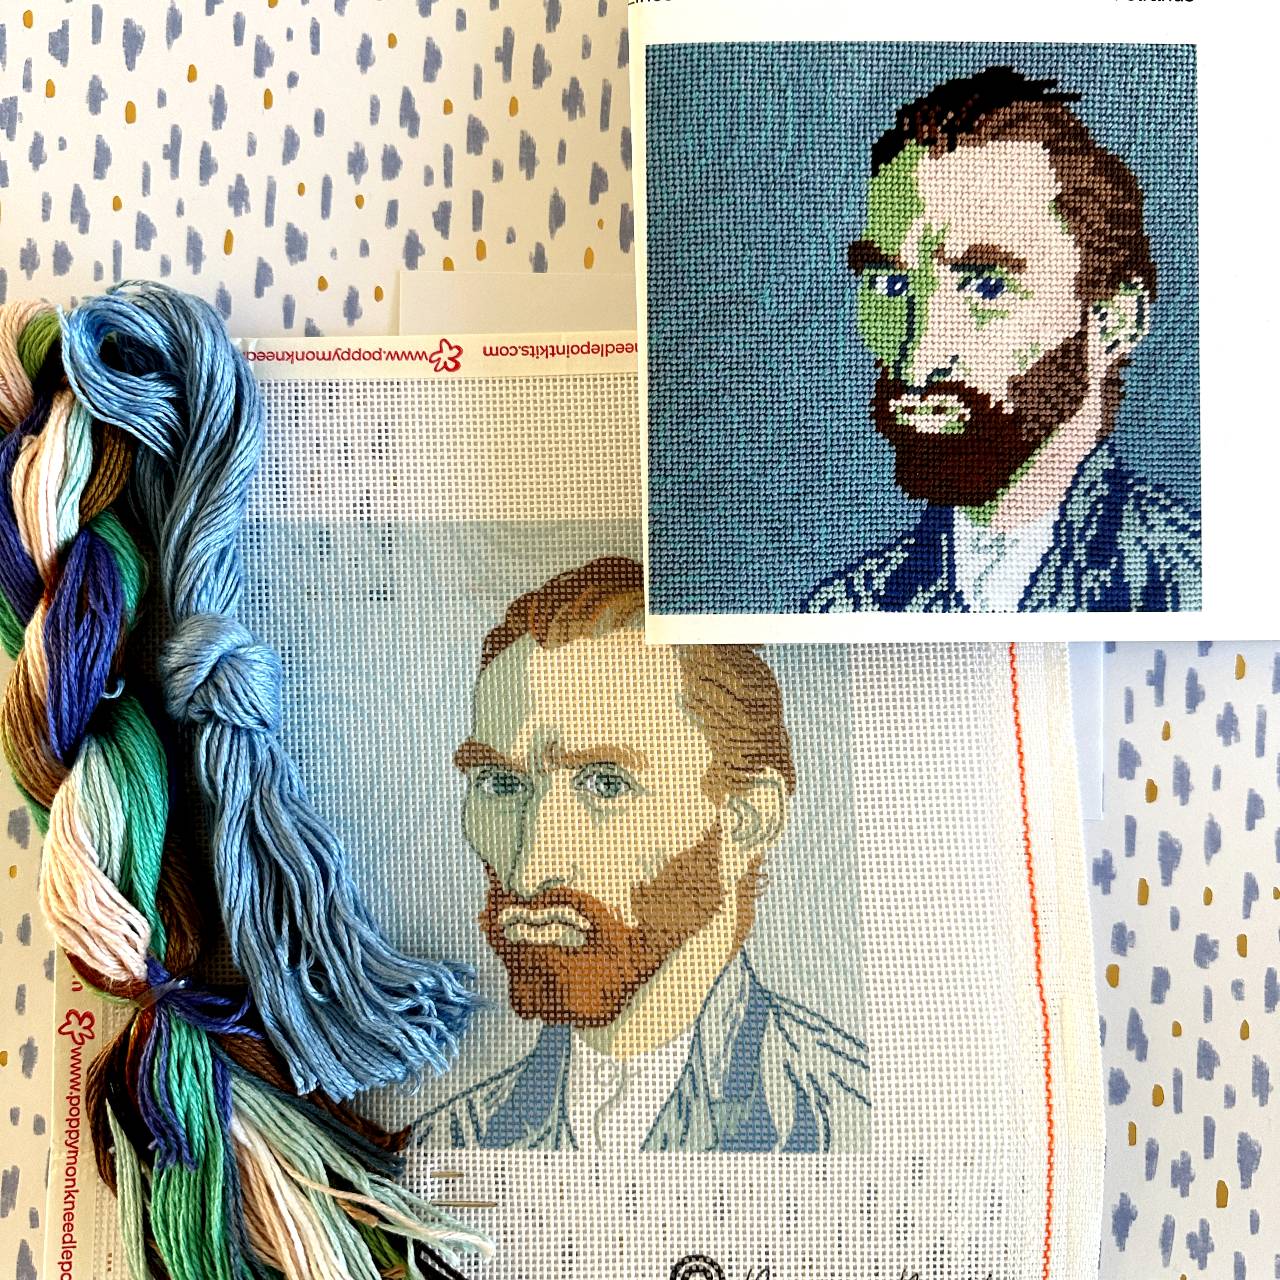 Van Gogh needlepoint kit